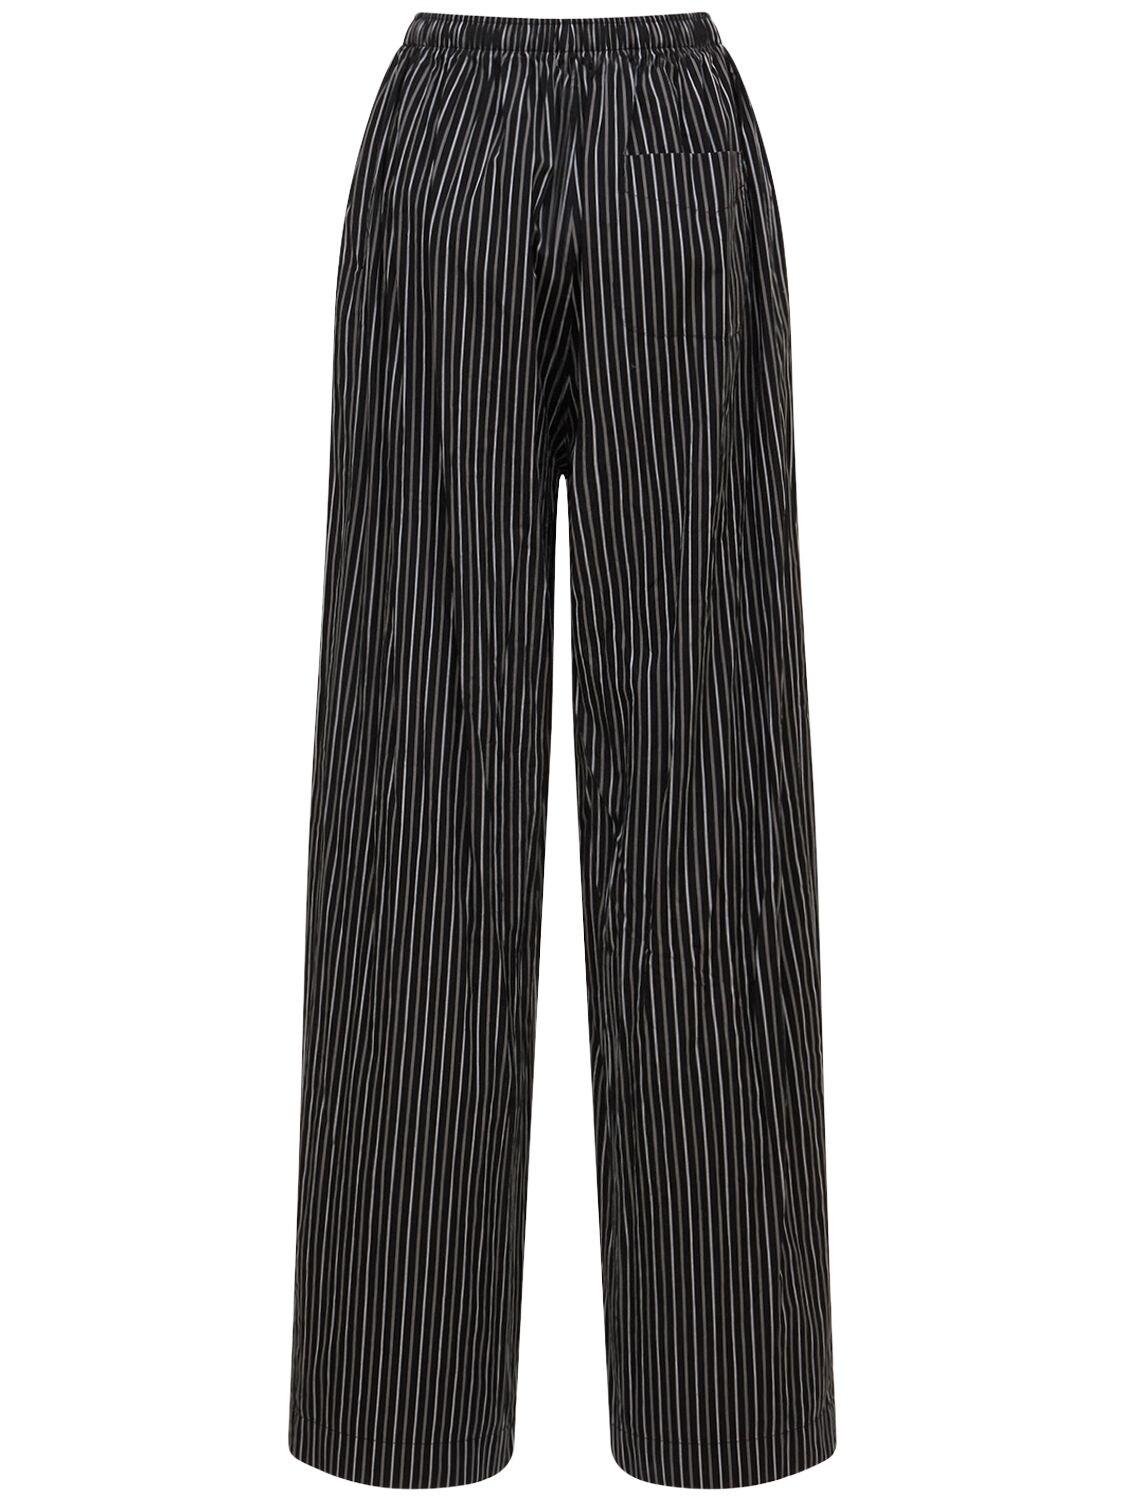 Balenciaga Pajama Striped Poplin Pants in Black | Lyst